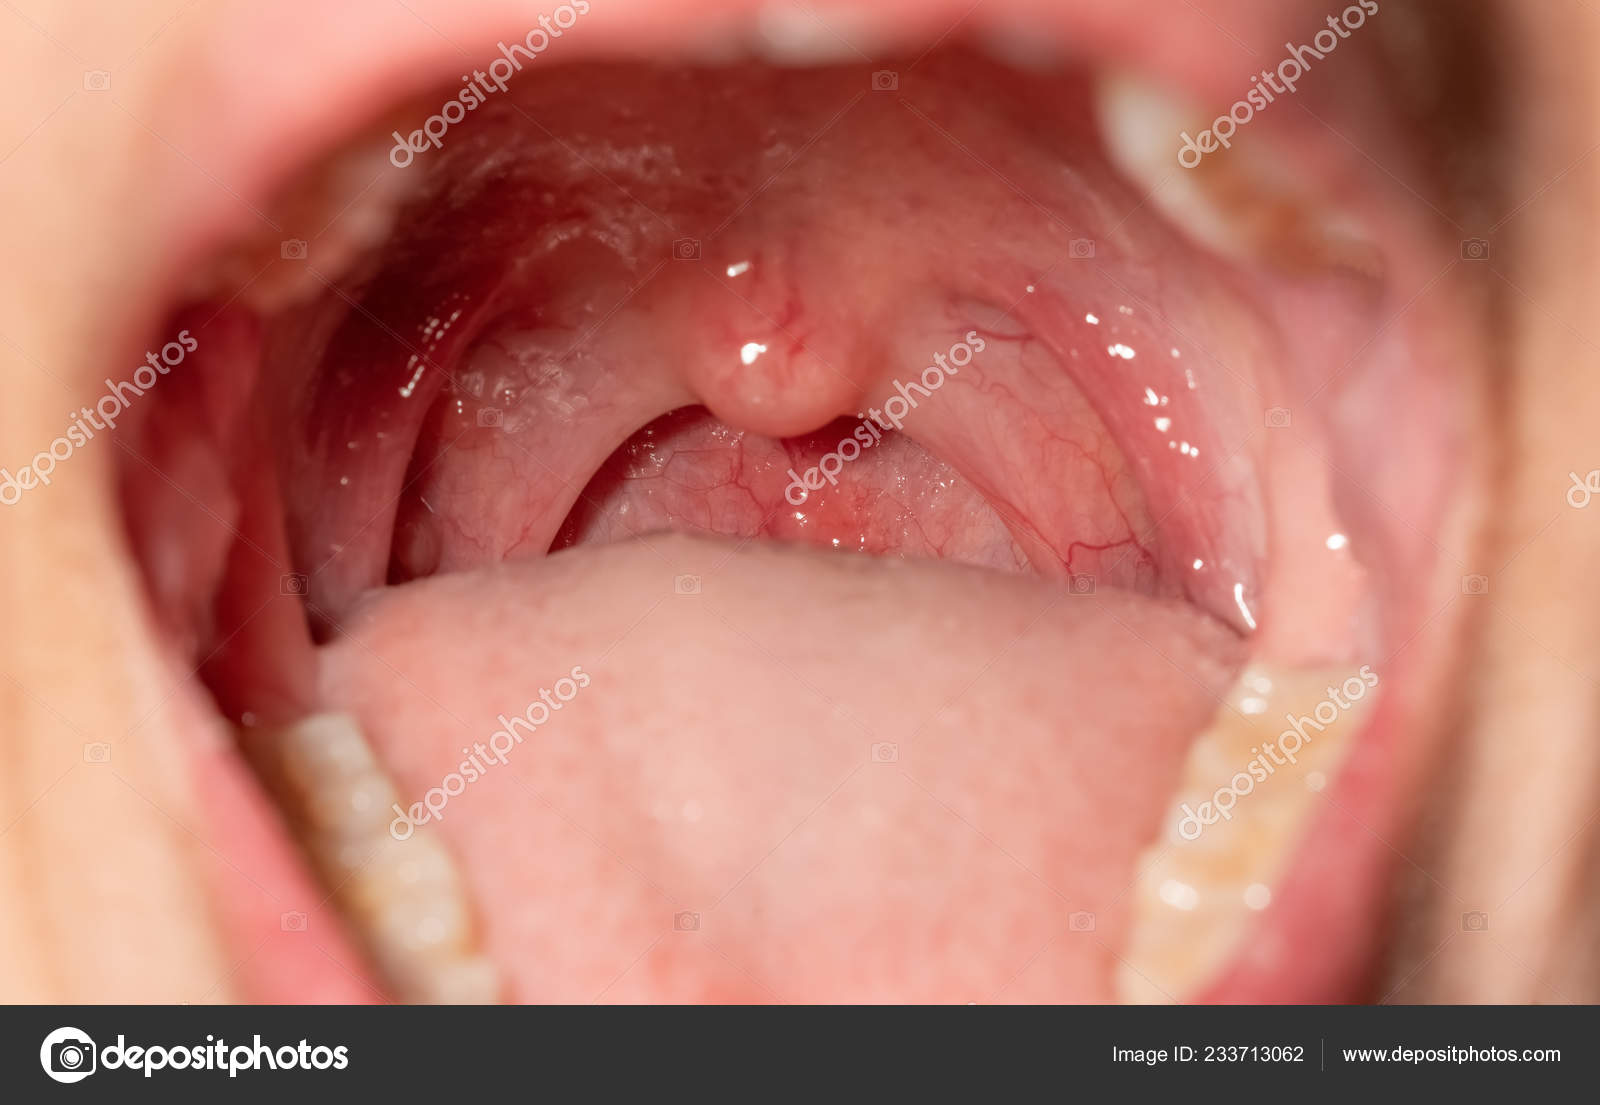 Throat Photos